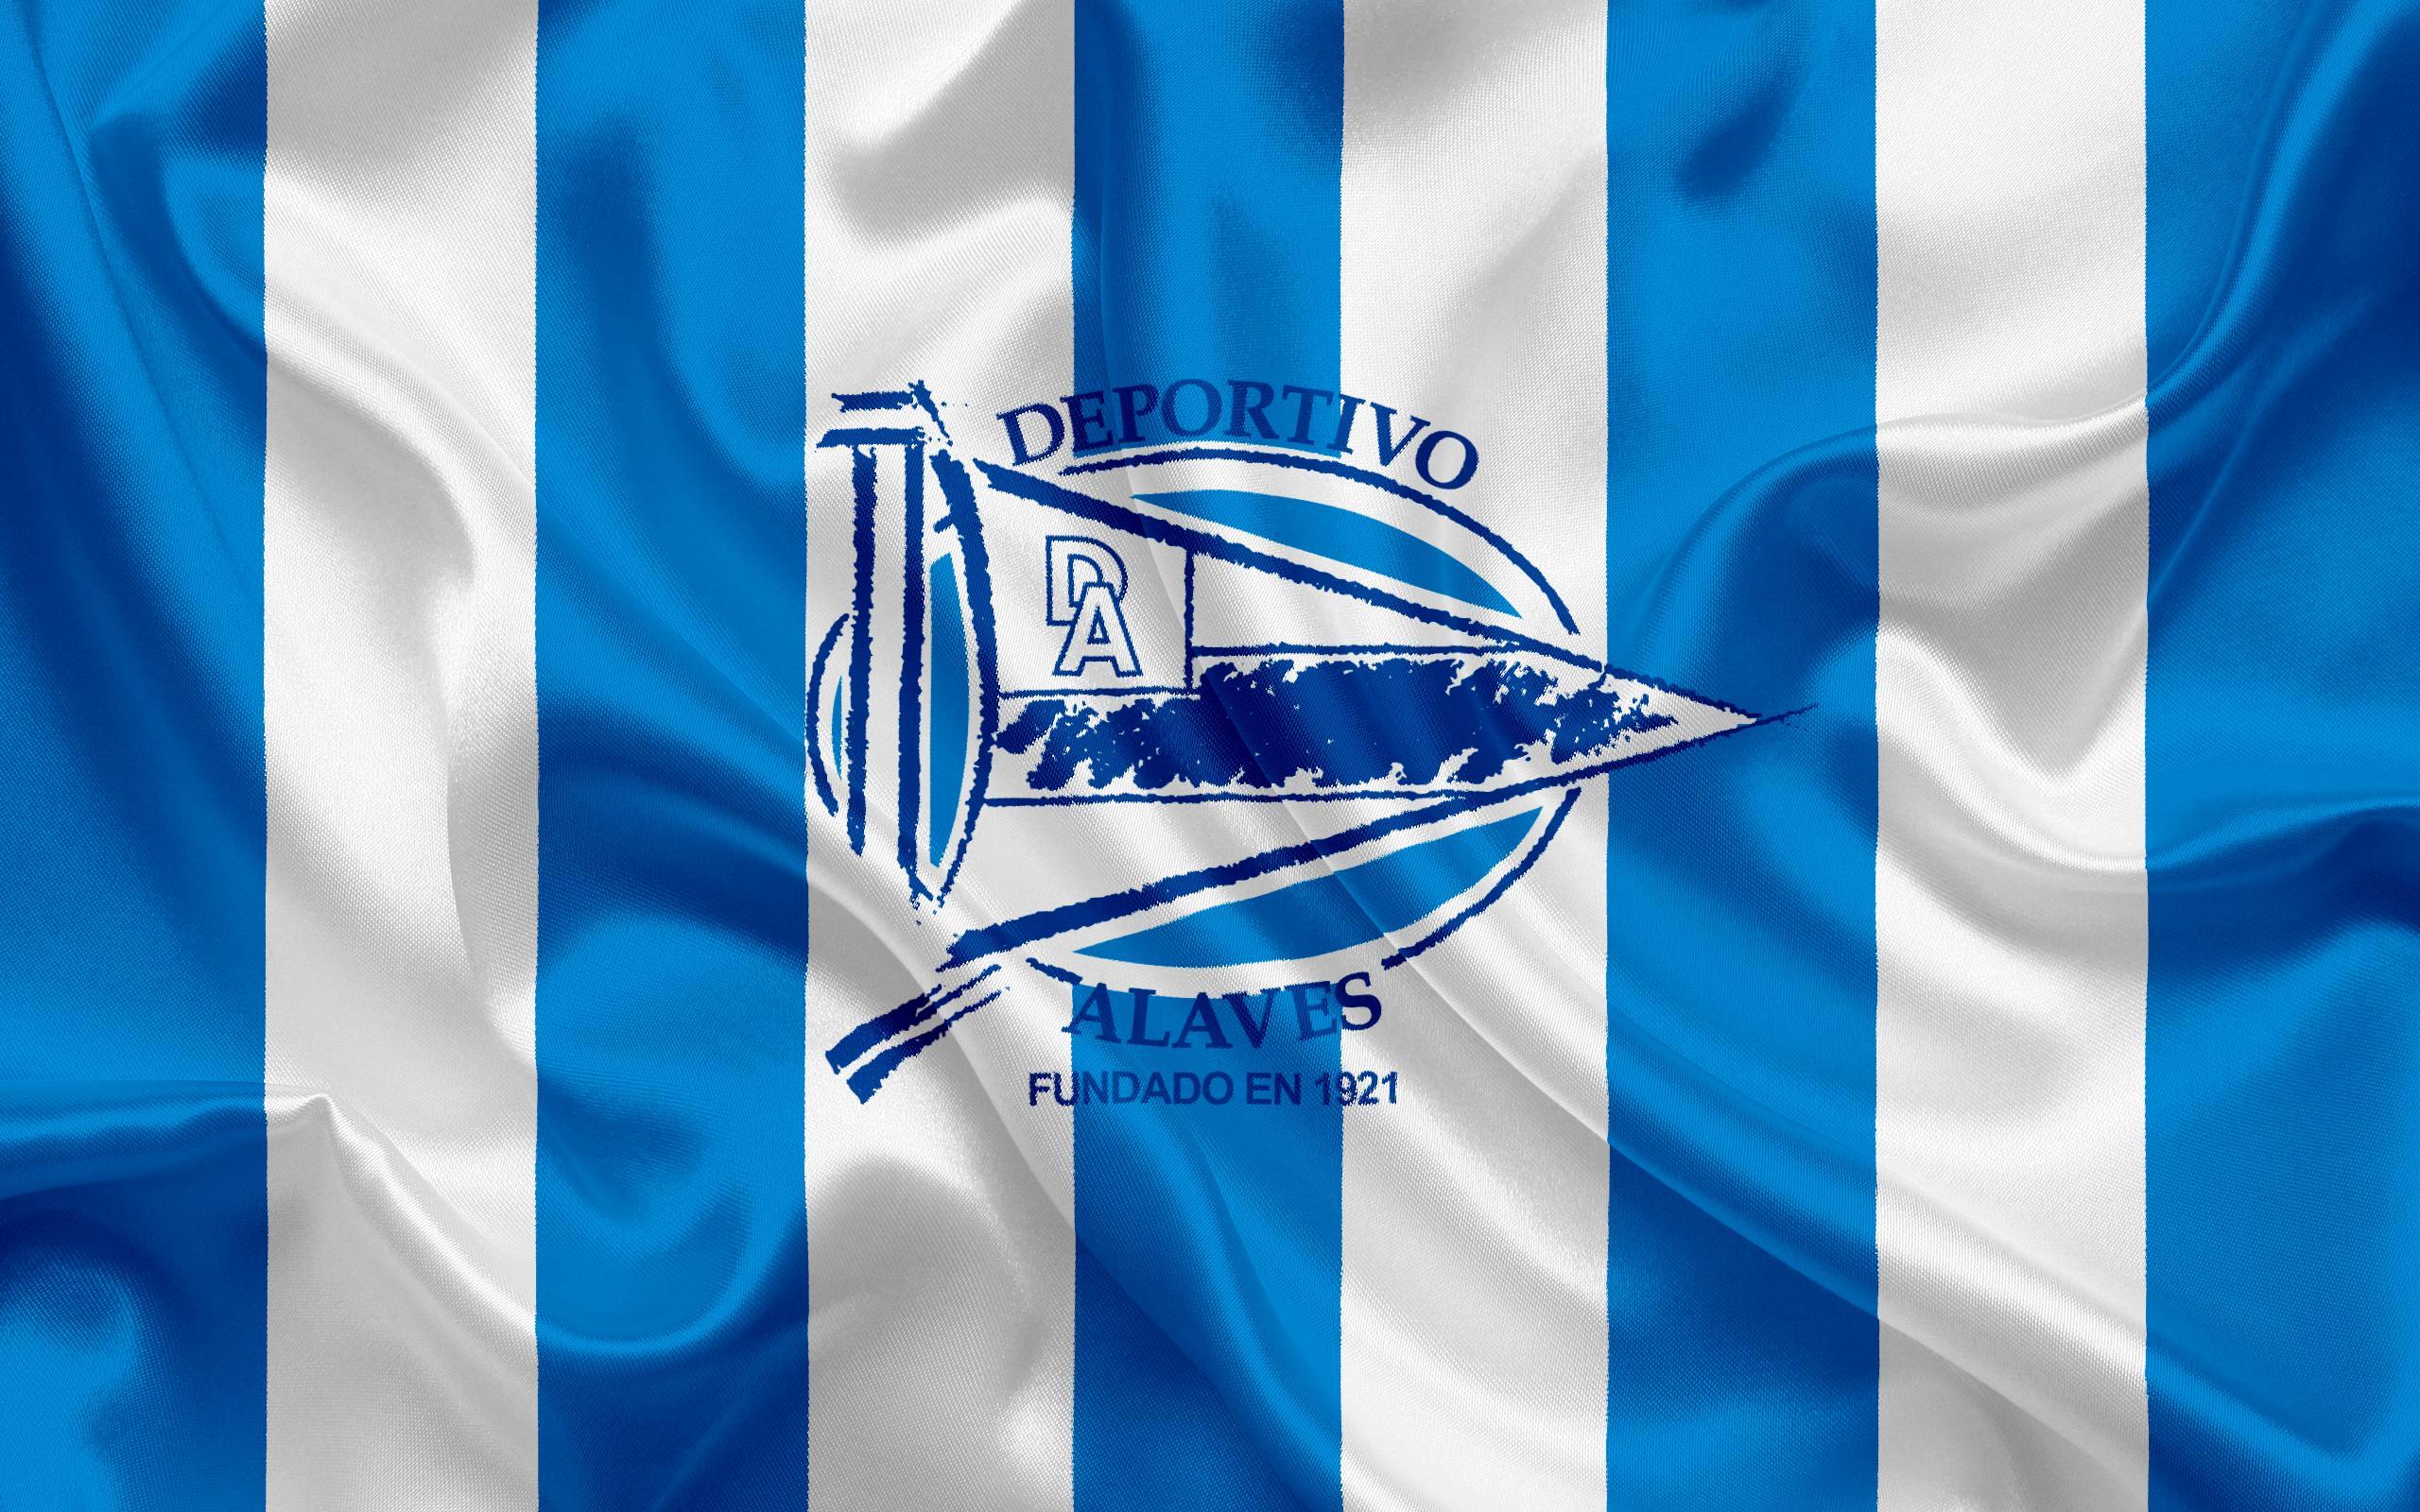 Download wallpaper Deportivo Alaves, football club, emblem, logo